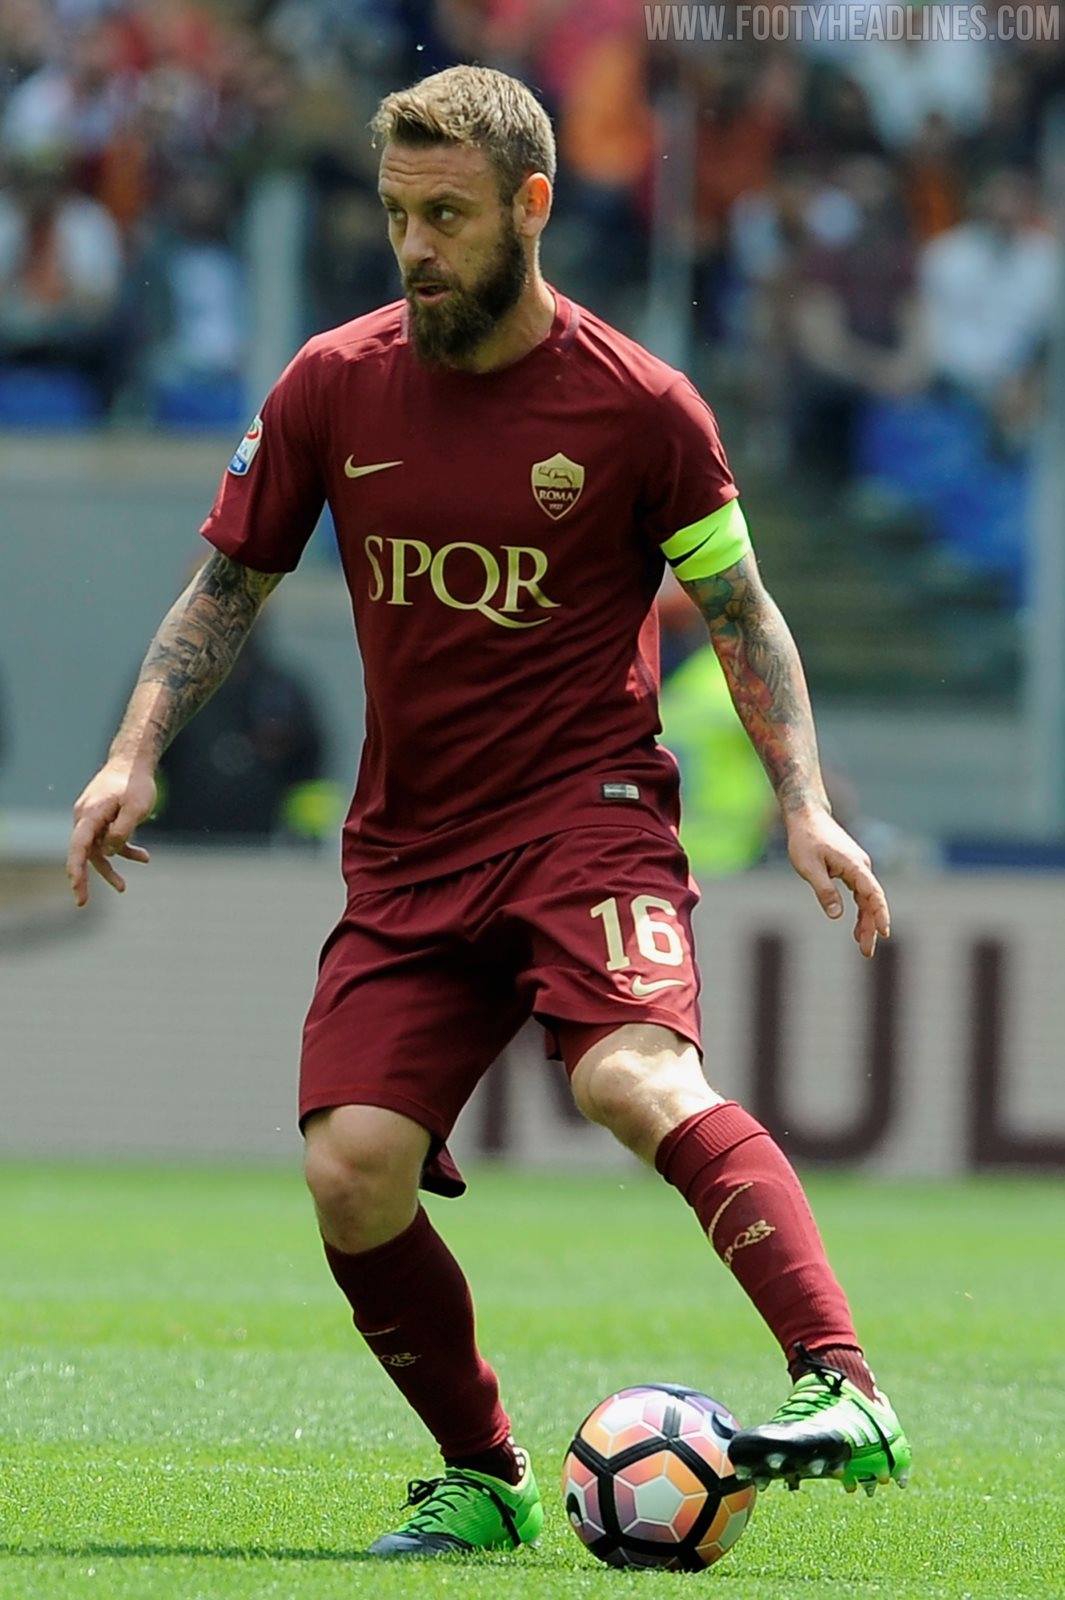 Bestätigt: AS Roma bringt SPQR auf Trikots zurück - Nur Fussball